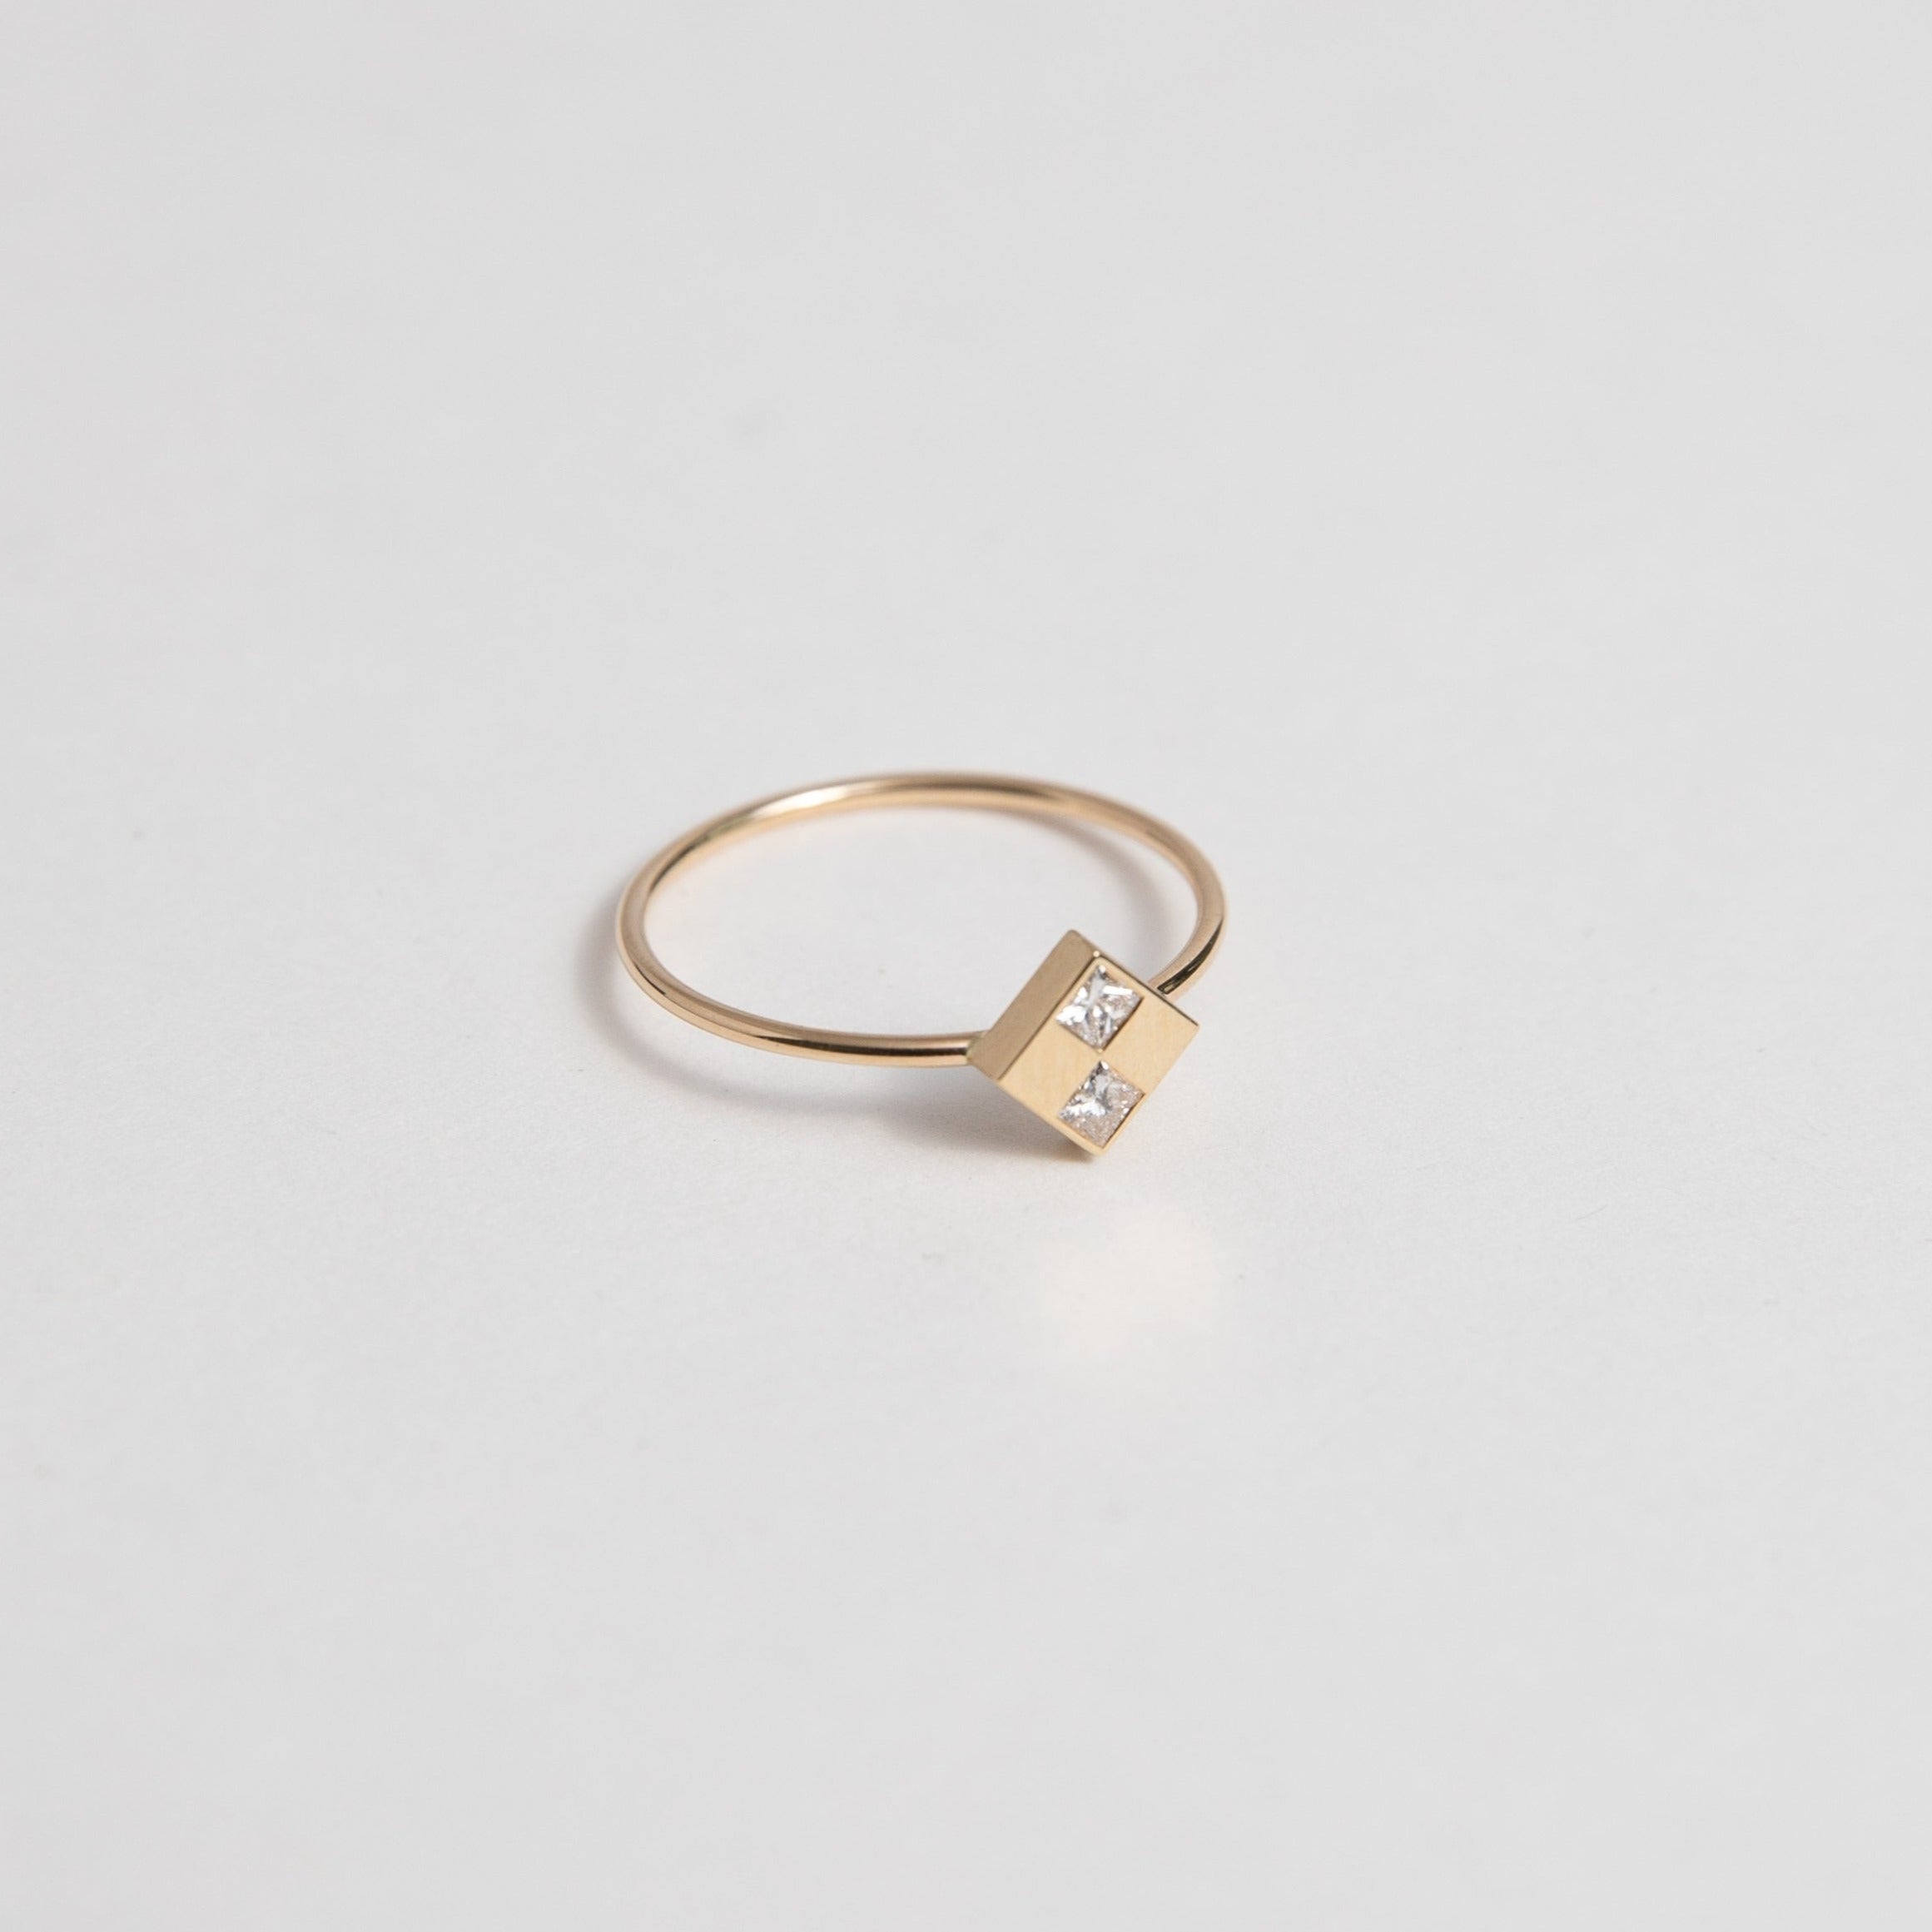 Stainless Steel Diamond Heart Ring For Couples Elegant Designer Jewelry  Gift For Women And Men From Cftde, $9.05 | DHgate.Com